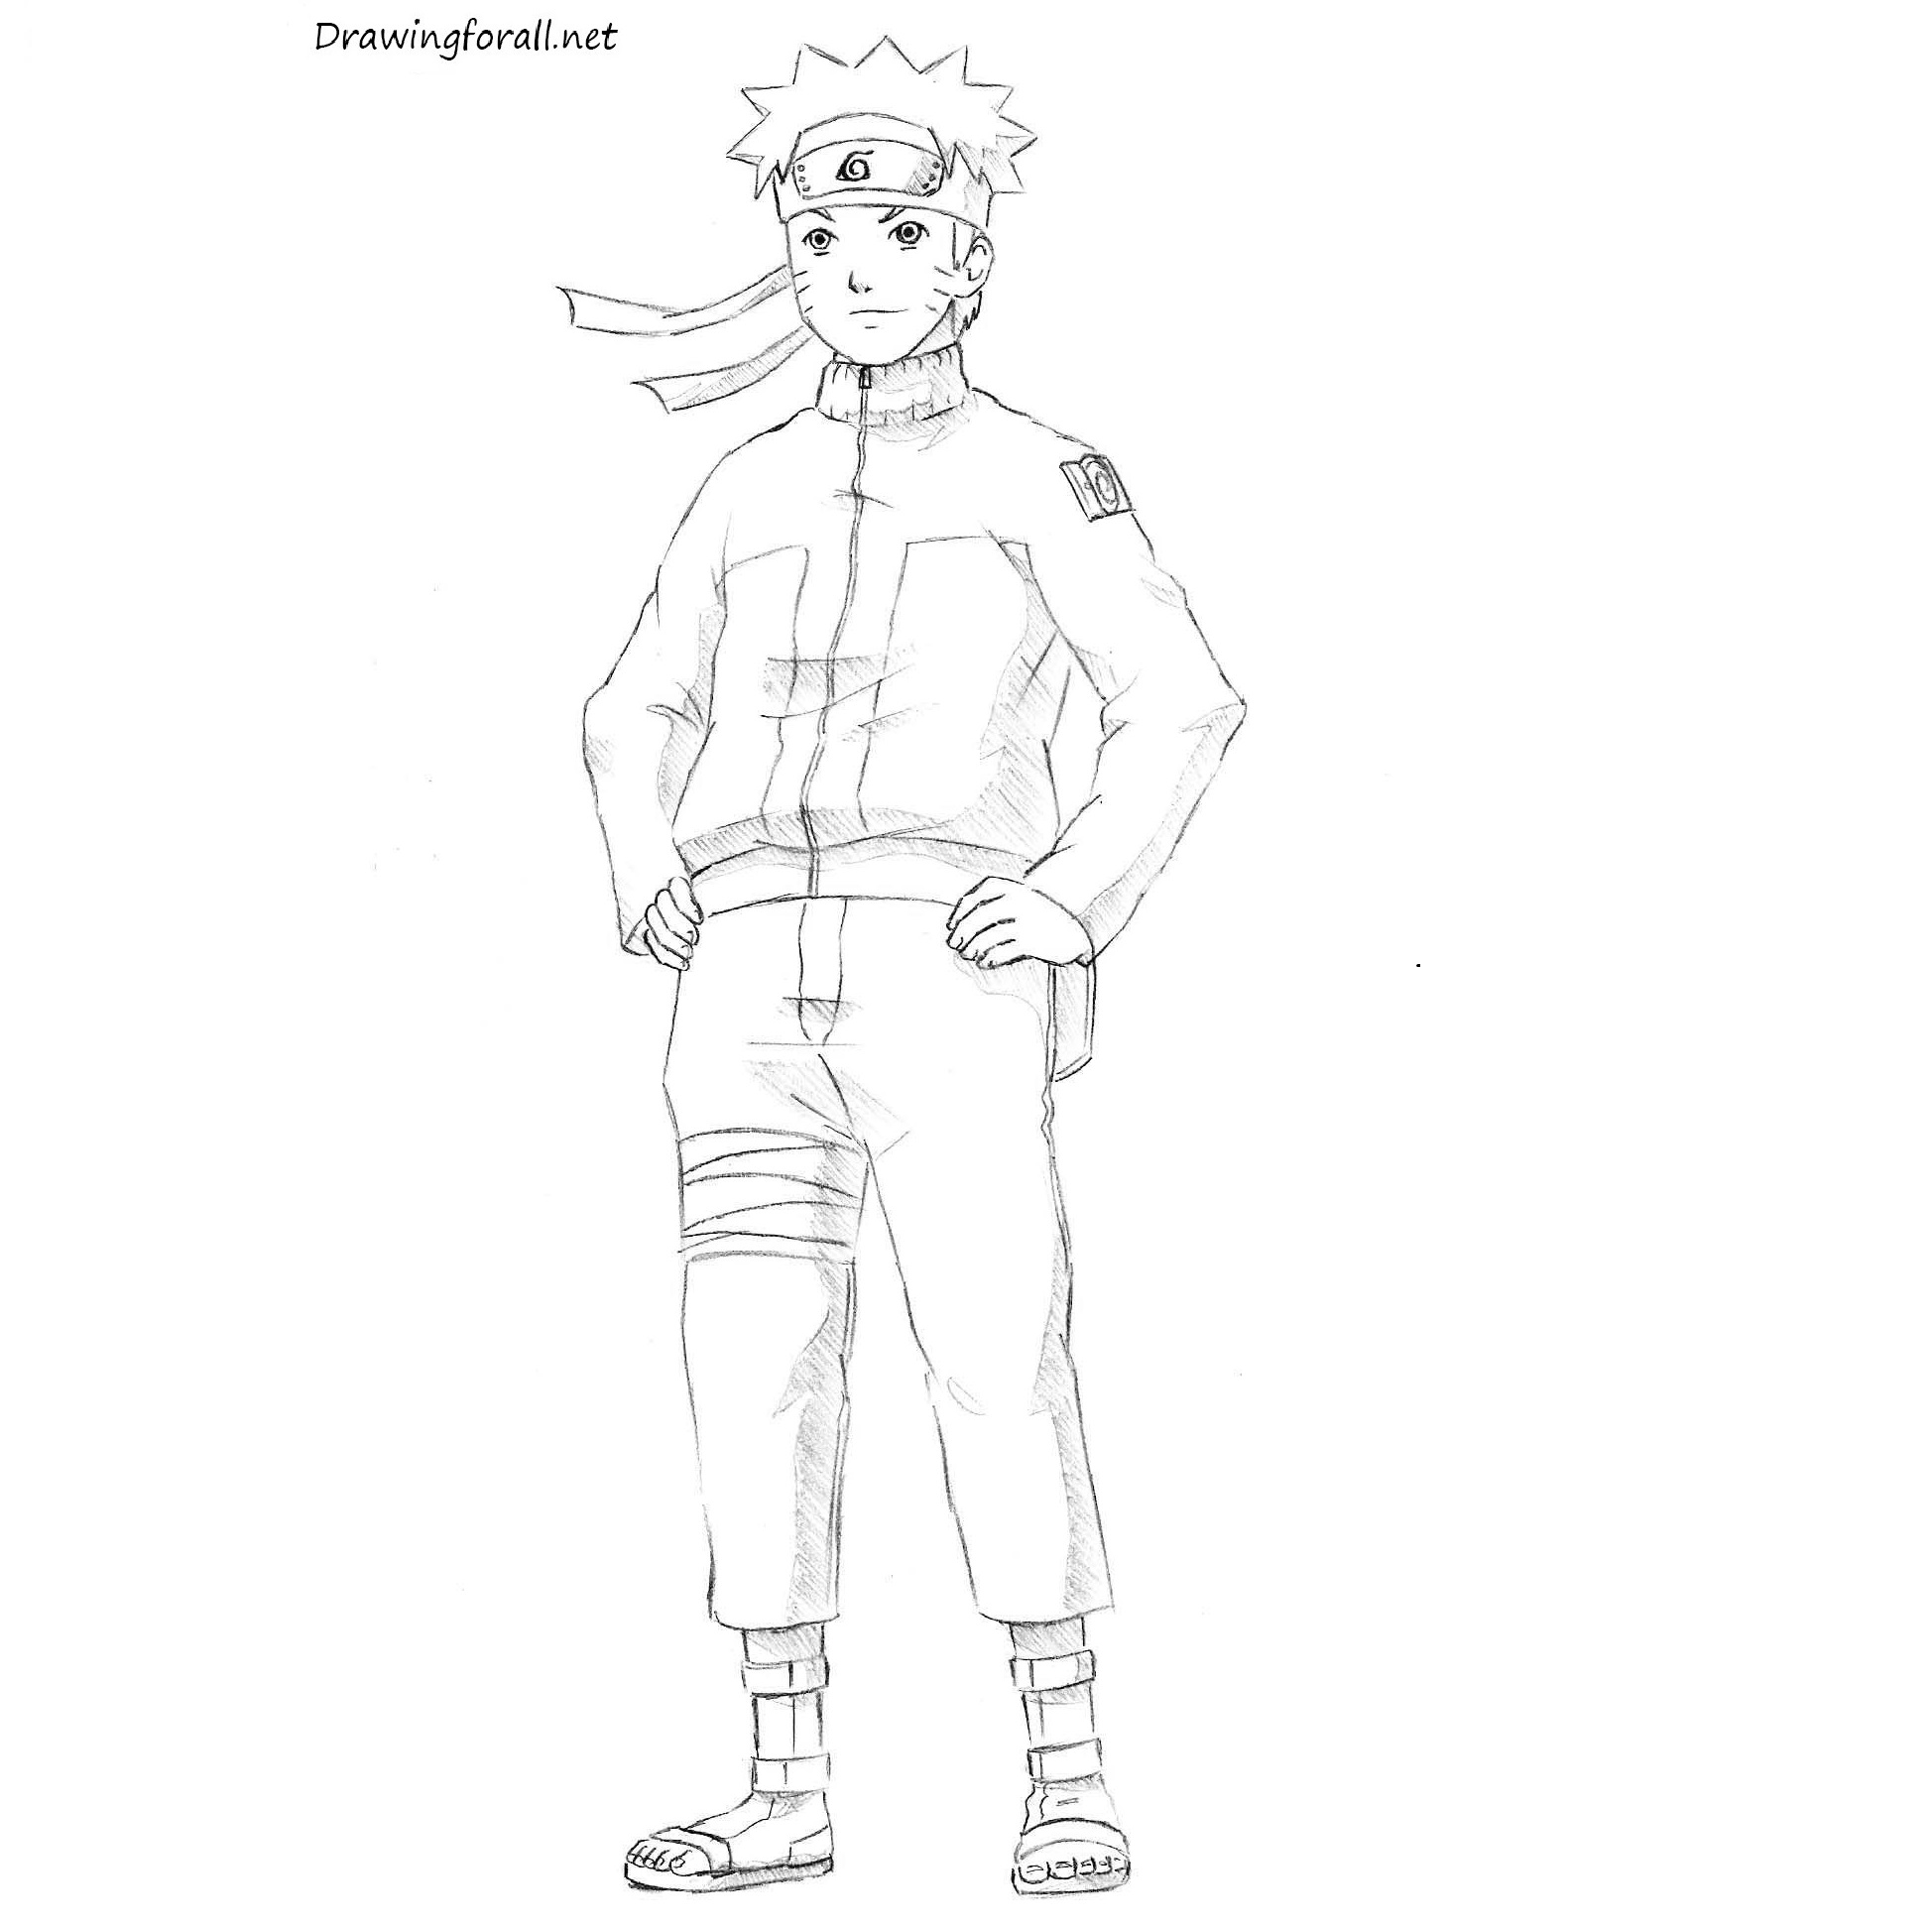 Easy Anime sketch  how to Draw Naruto uzumaki [ full body] step